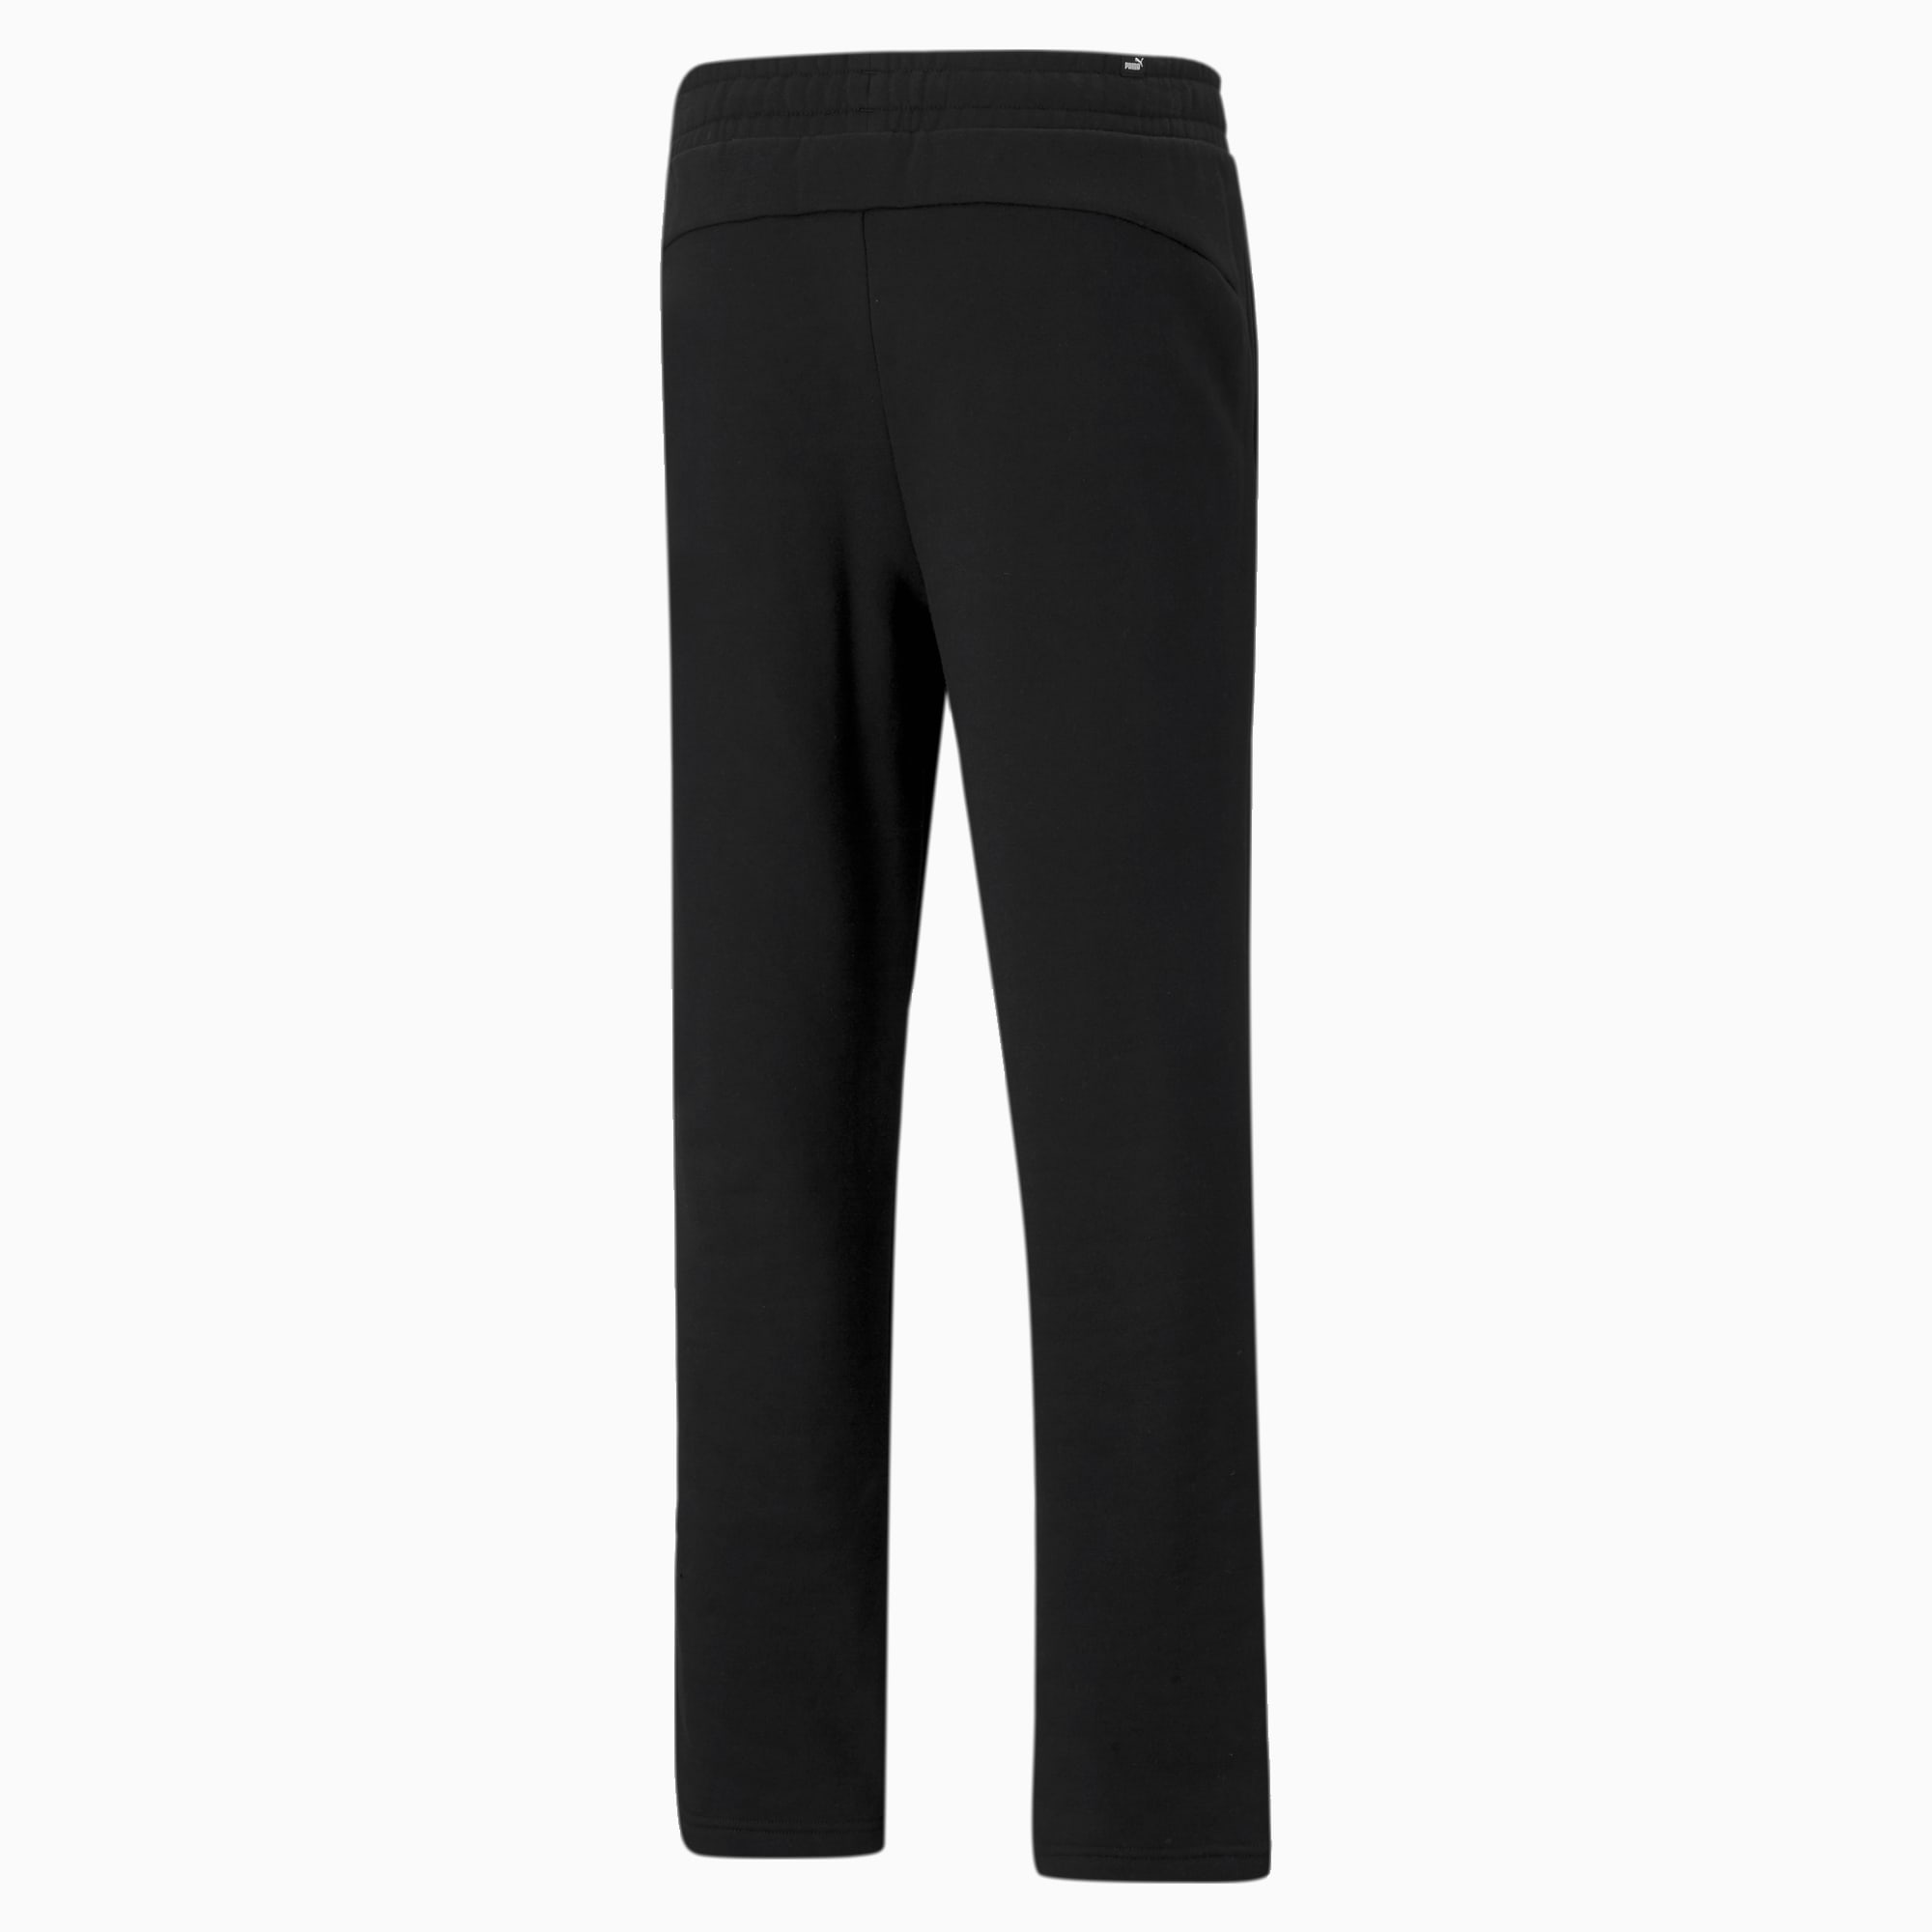 PUMA Essentials Logo Men's Pants, Black, Size XS, Clothing